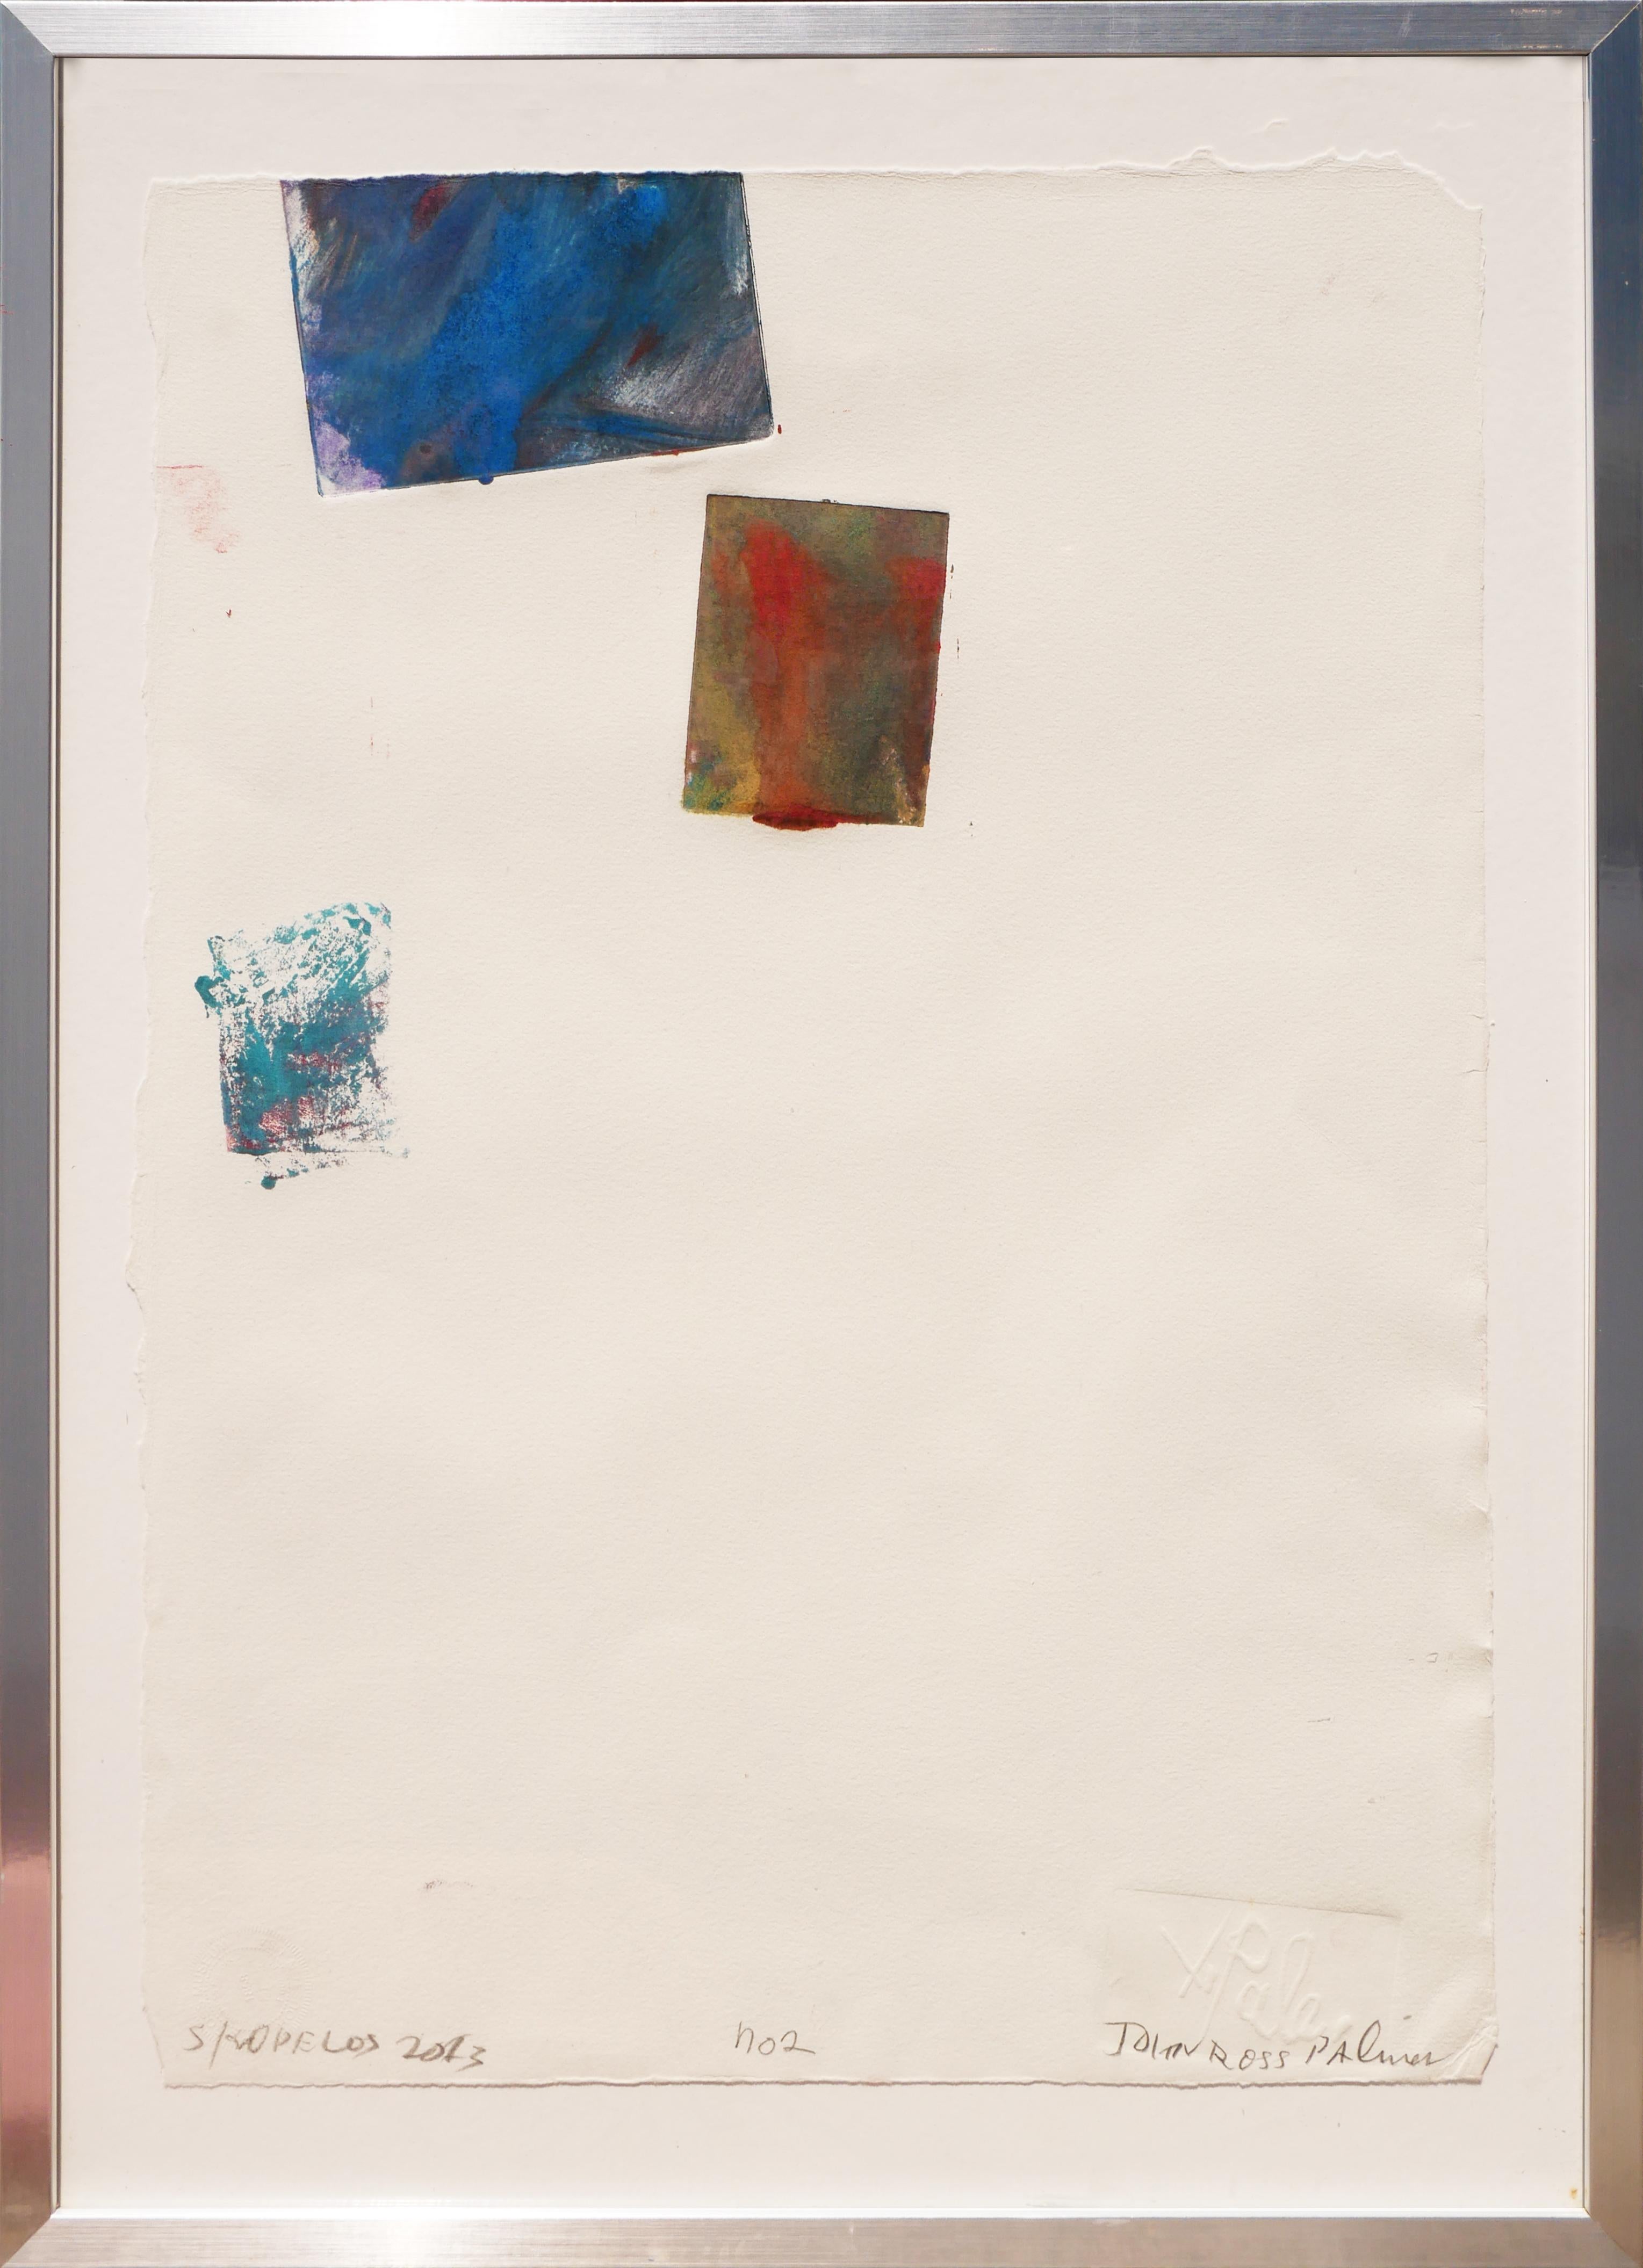 Skopolos Greece Monoprint No. 2 - Impression contemporaine abstraite orange, bleue et sarcelle - Mixed Media Art de John Palmer